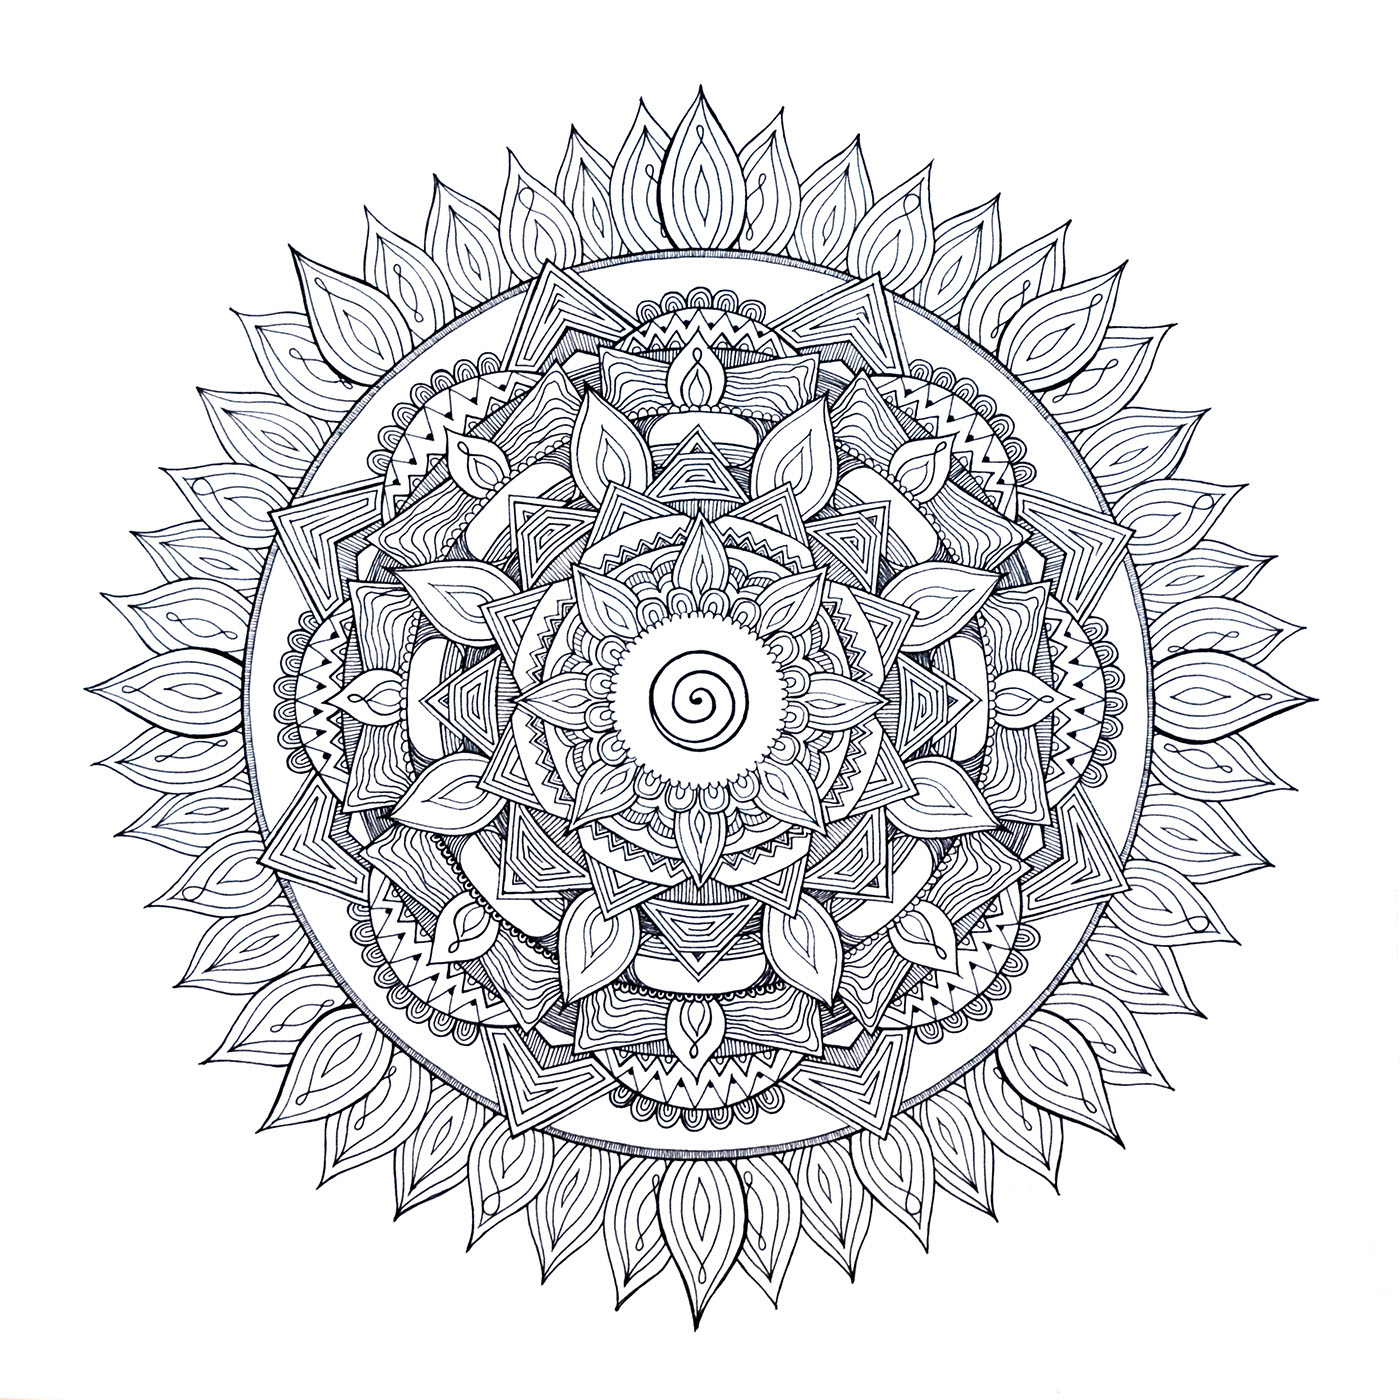 Mandala radial design black and white Drawing  Floral design ILLUSTRATION  ink drawing monochrome Nature zentangle